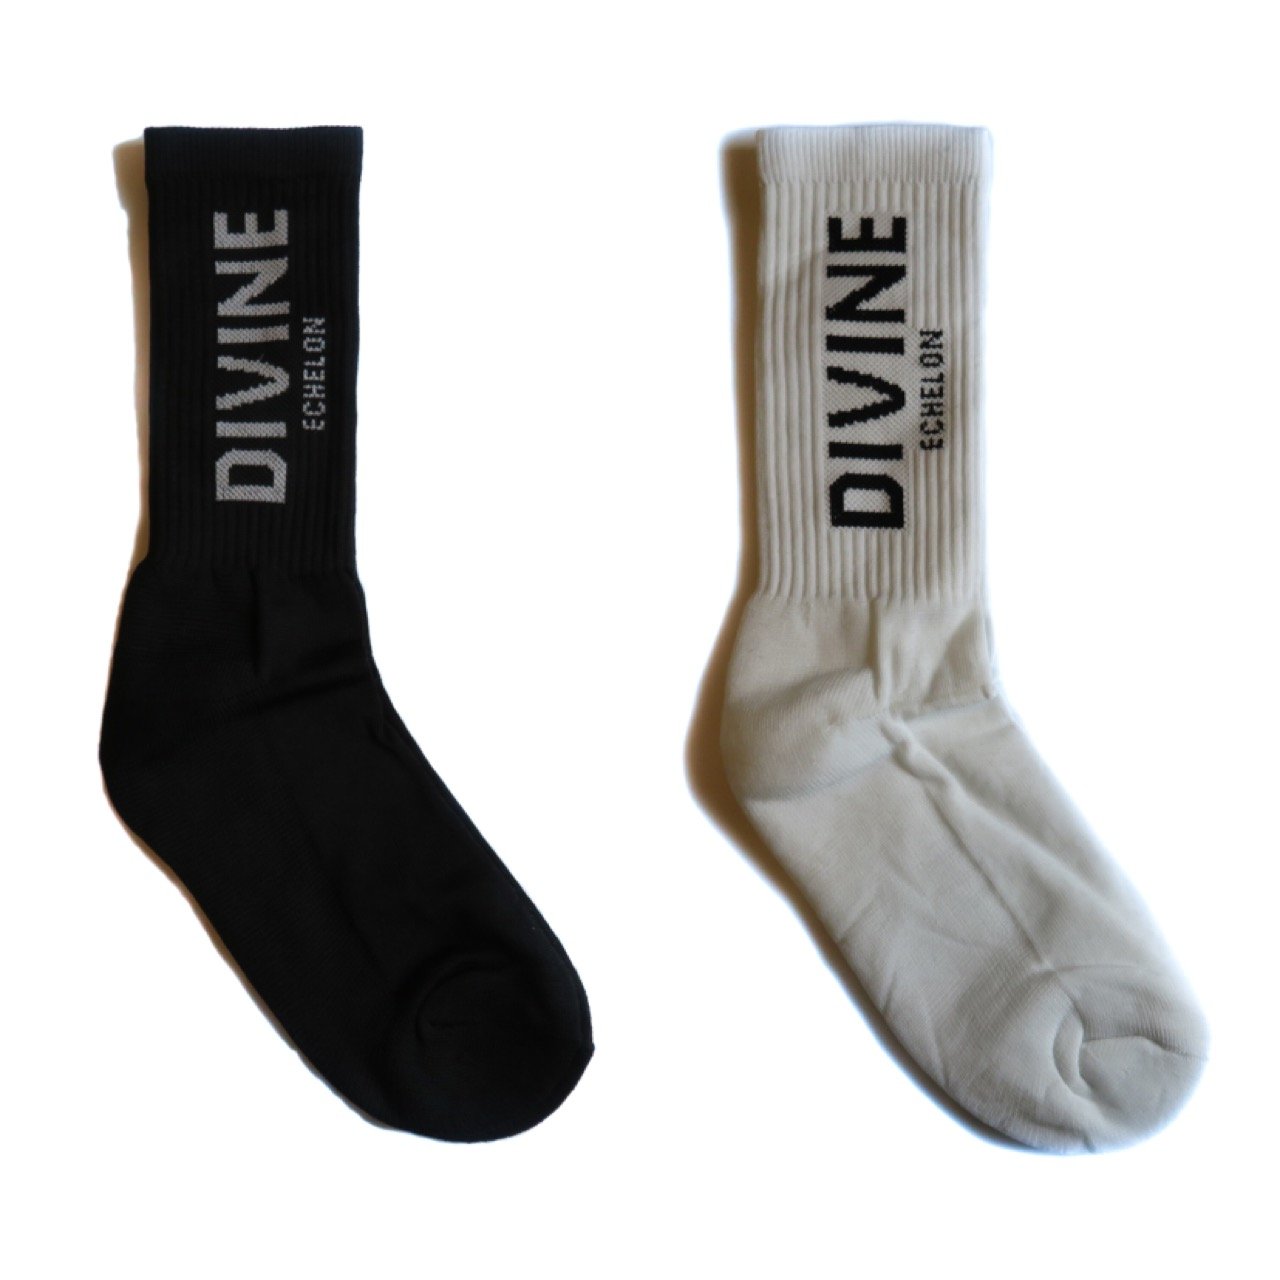 Image of Divine Echelon Crew Socks 